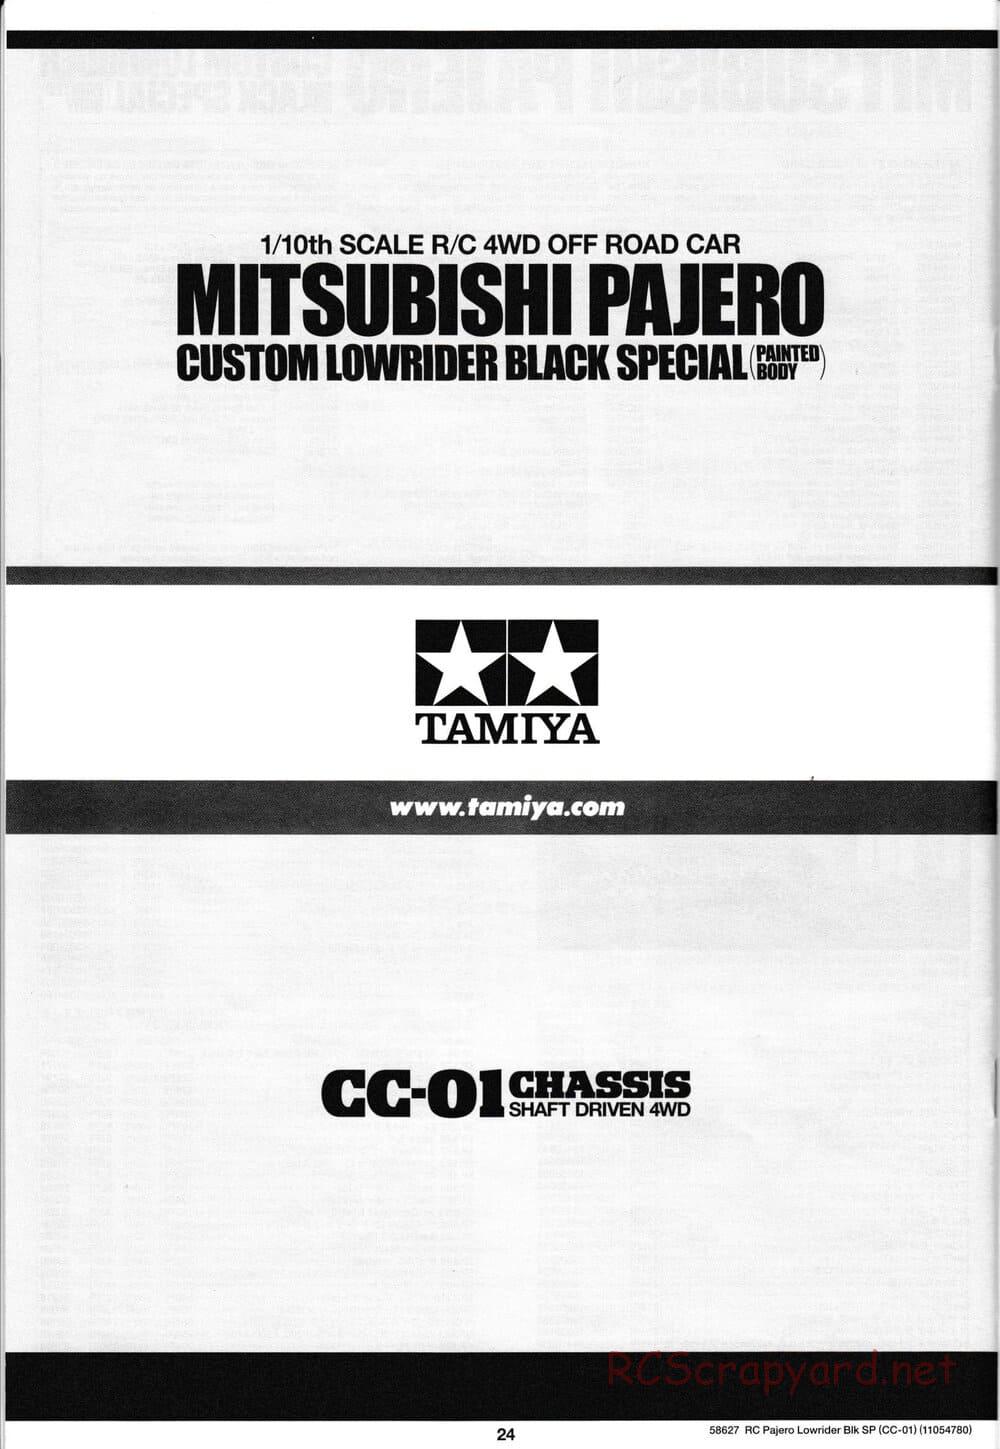 Tamiya - Mitsubishi Pajero Custom Lowrider Black Special - CC-01 Chassis - Manual - Page 24